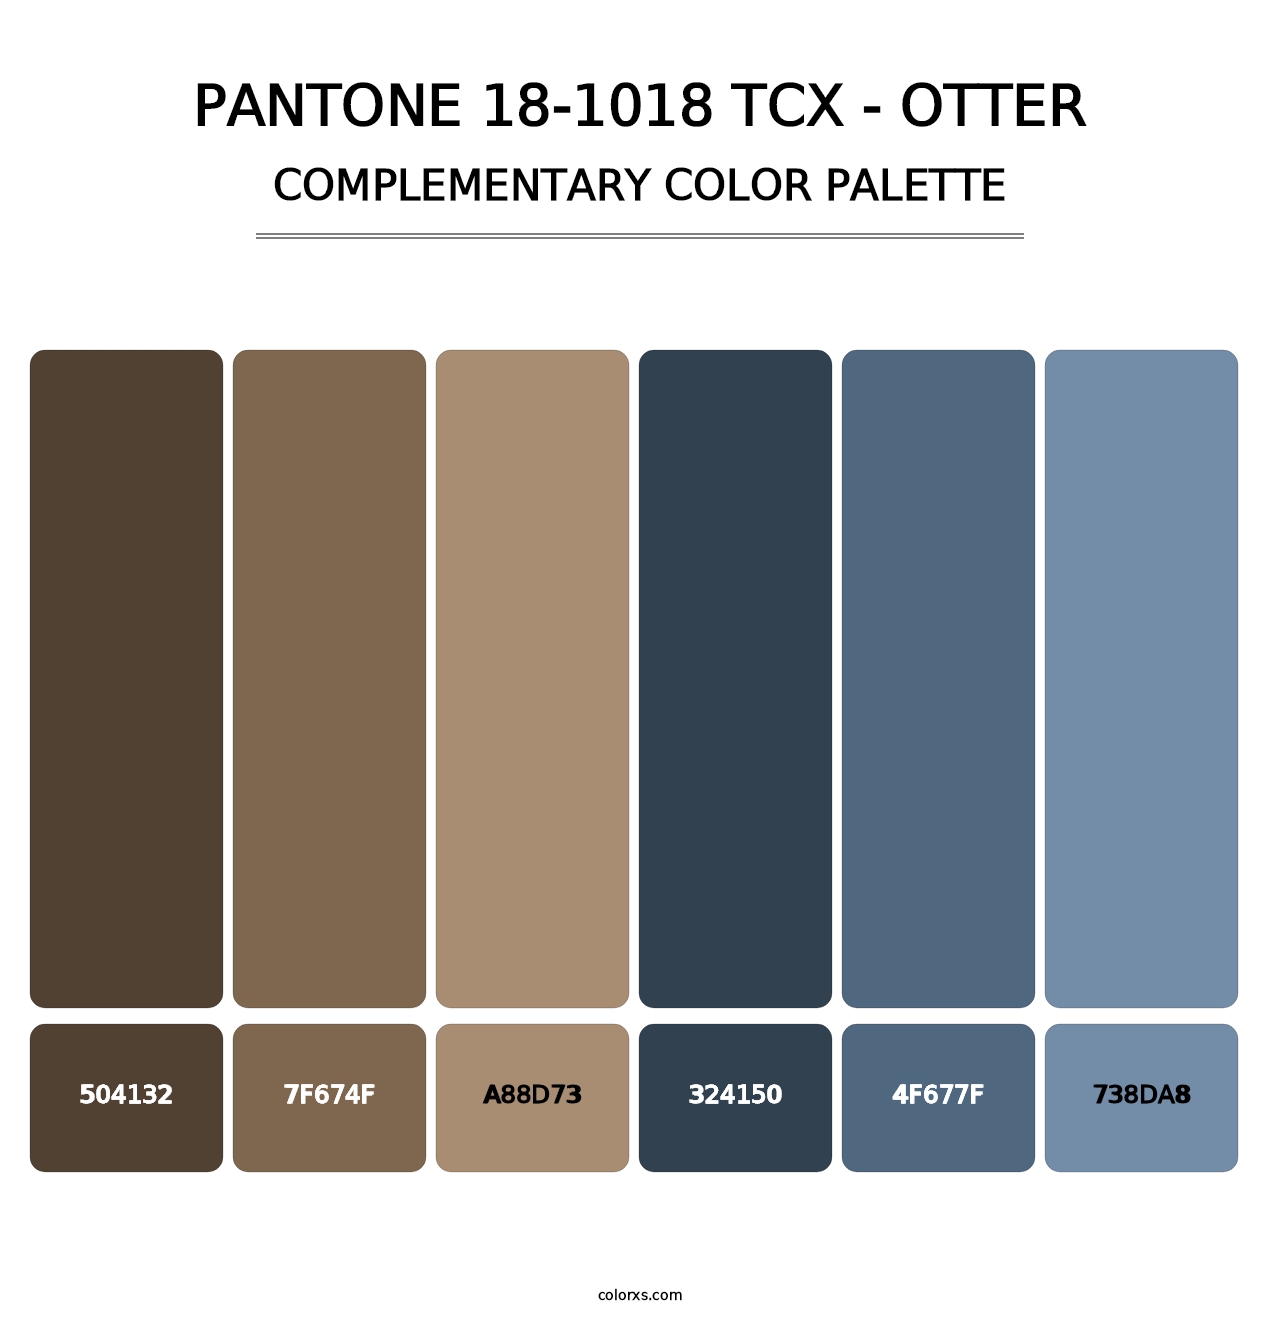 PANTONE 18-1018 TCX - Otter - Complementary Color Palette